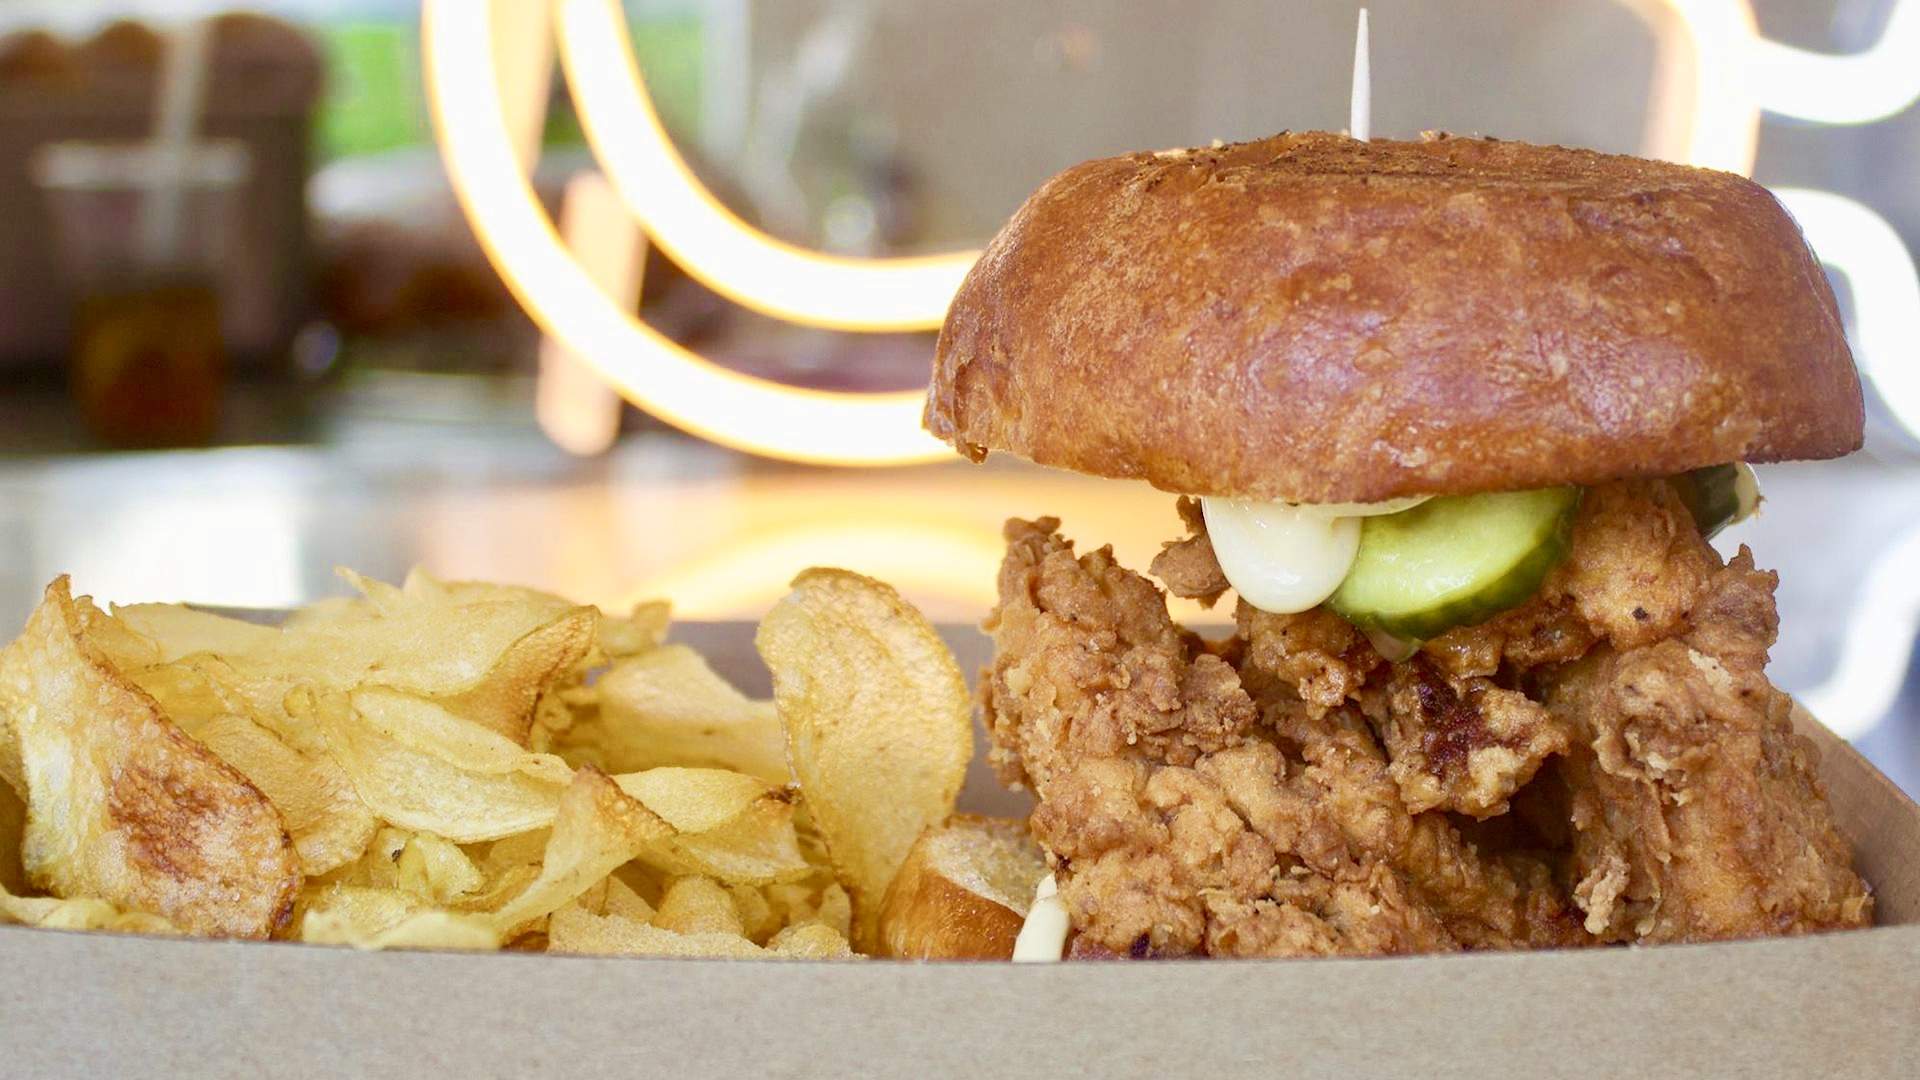 Meet the Auckland Food Truck Serving Authentic Nashville Hot Chicken